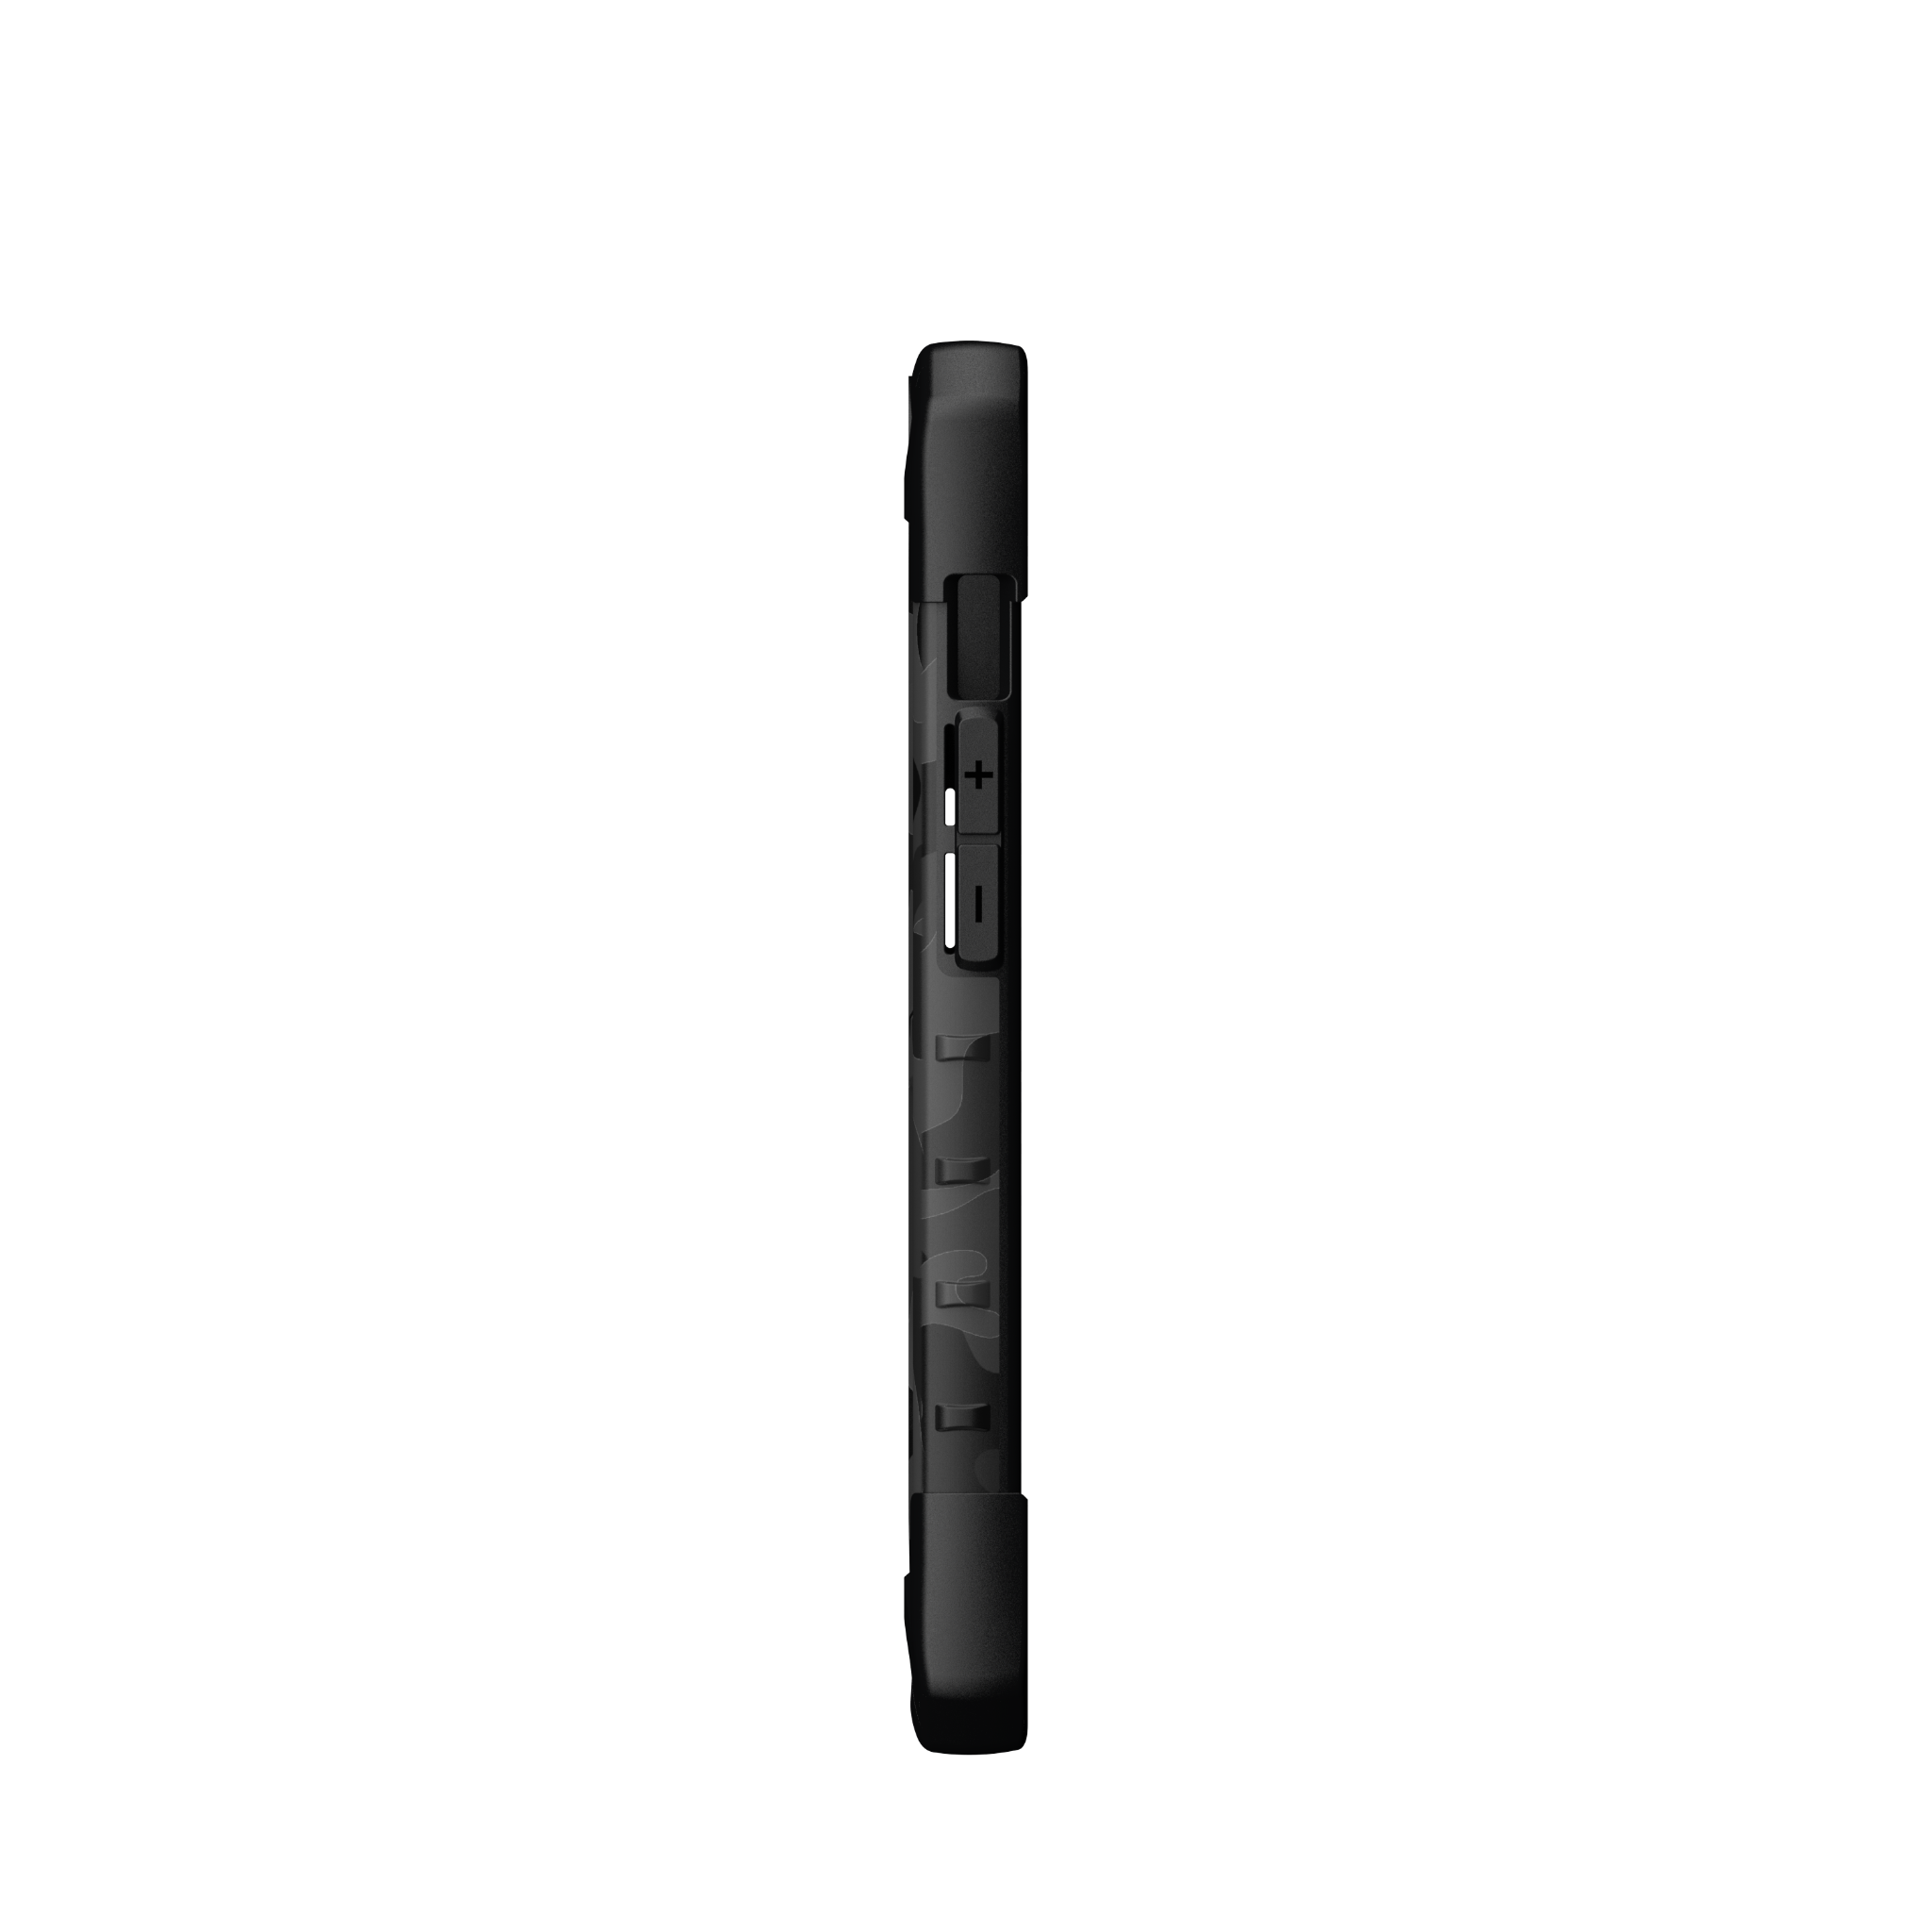  Ốp lưng Pathfinder SE cho iPhone 13 [6.1 inch] 